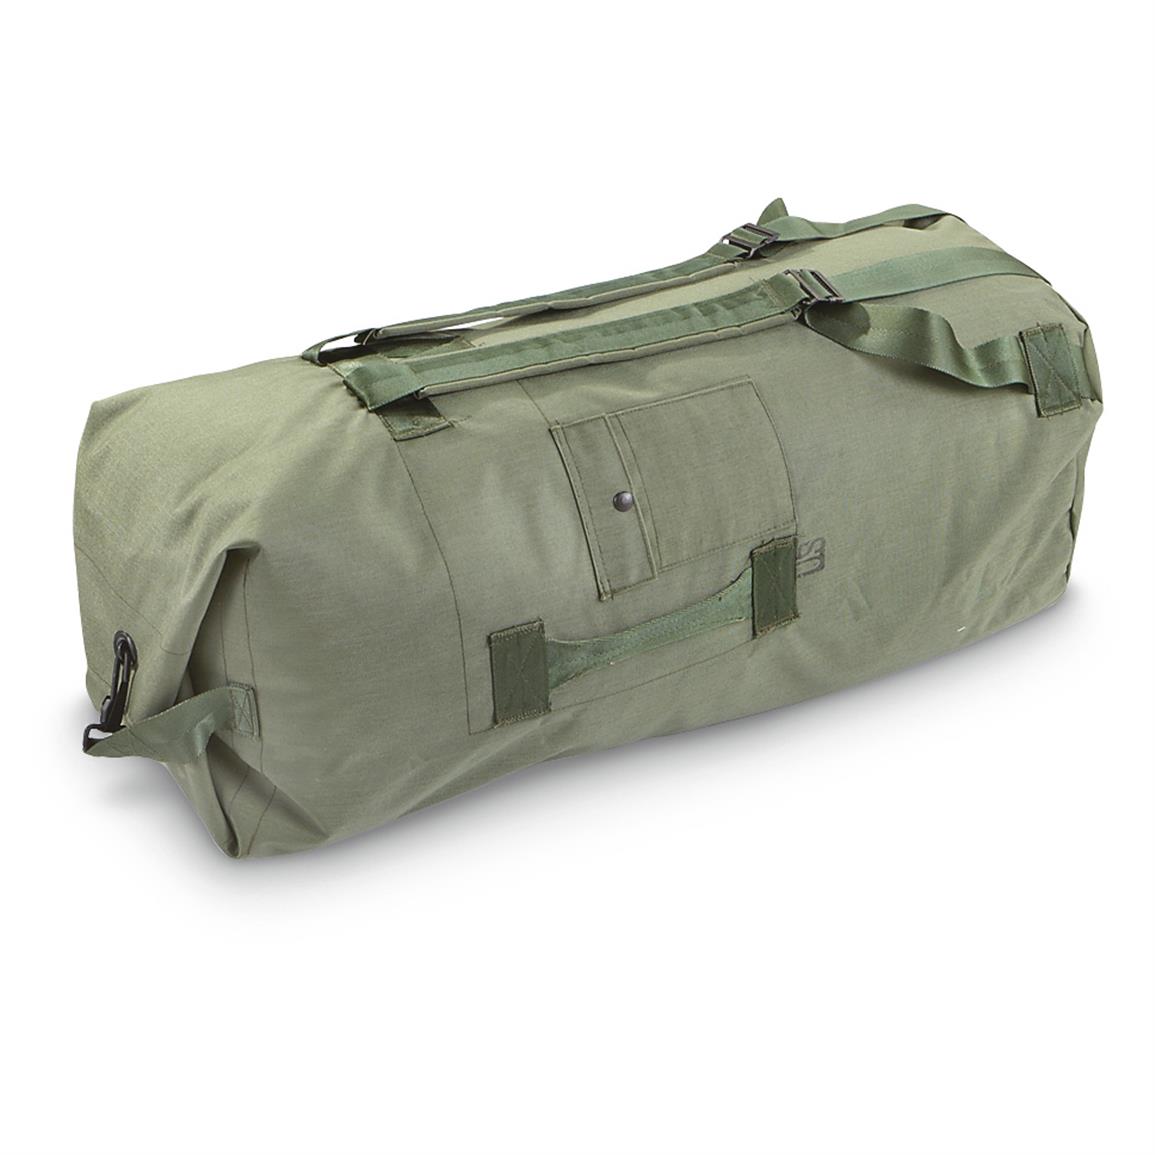 New U.S. Military Surplus Duffel Bag - 634437, Military & Camo Duffle Bags at Sportsman&#39;s Guide